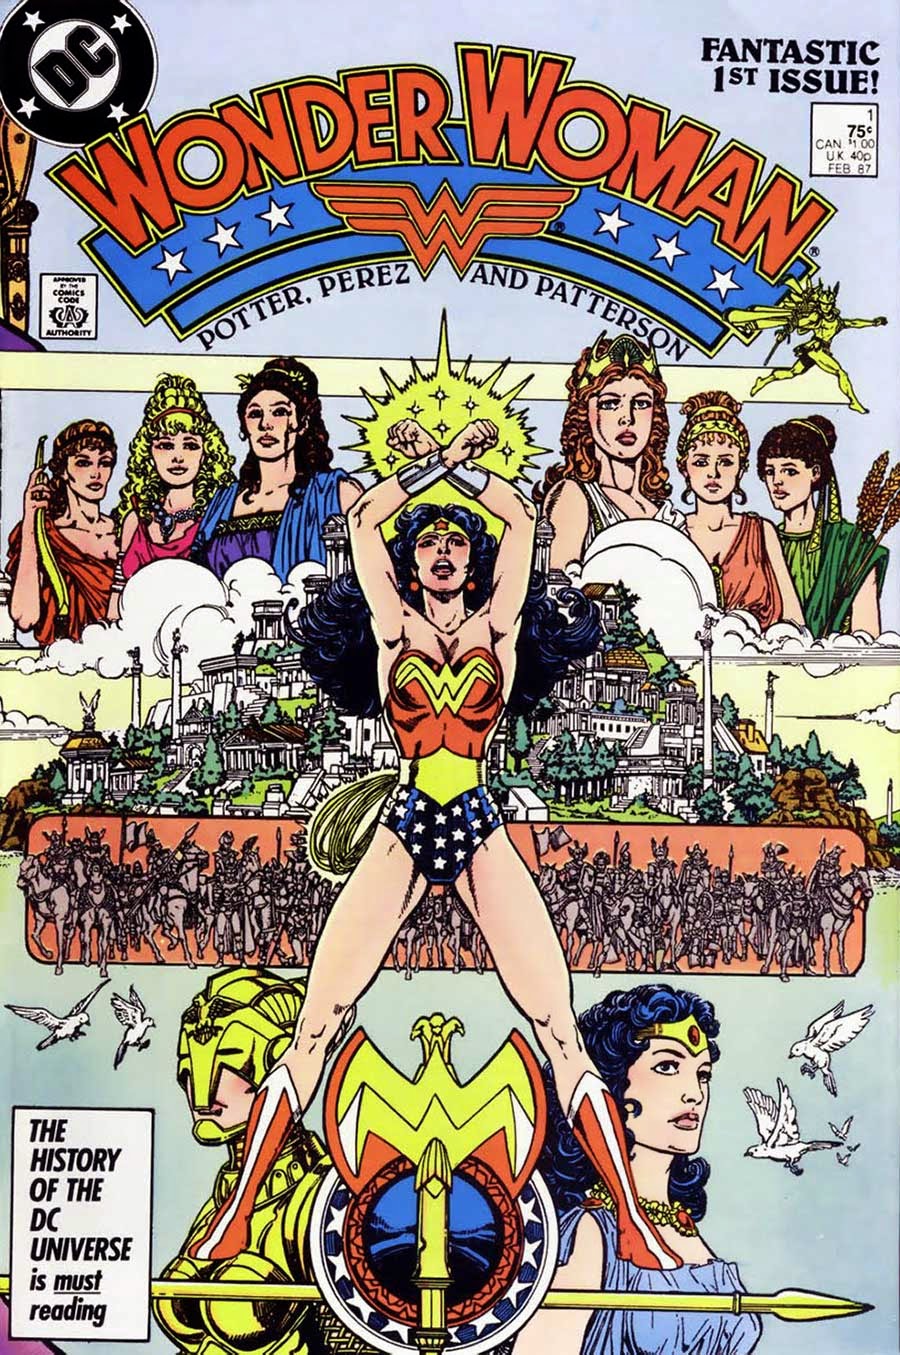 Wonder Woman #1 1987 cover